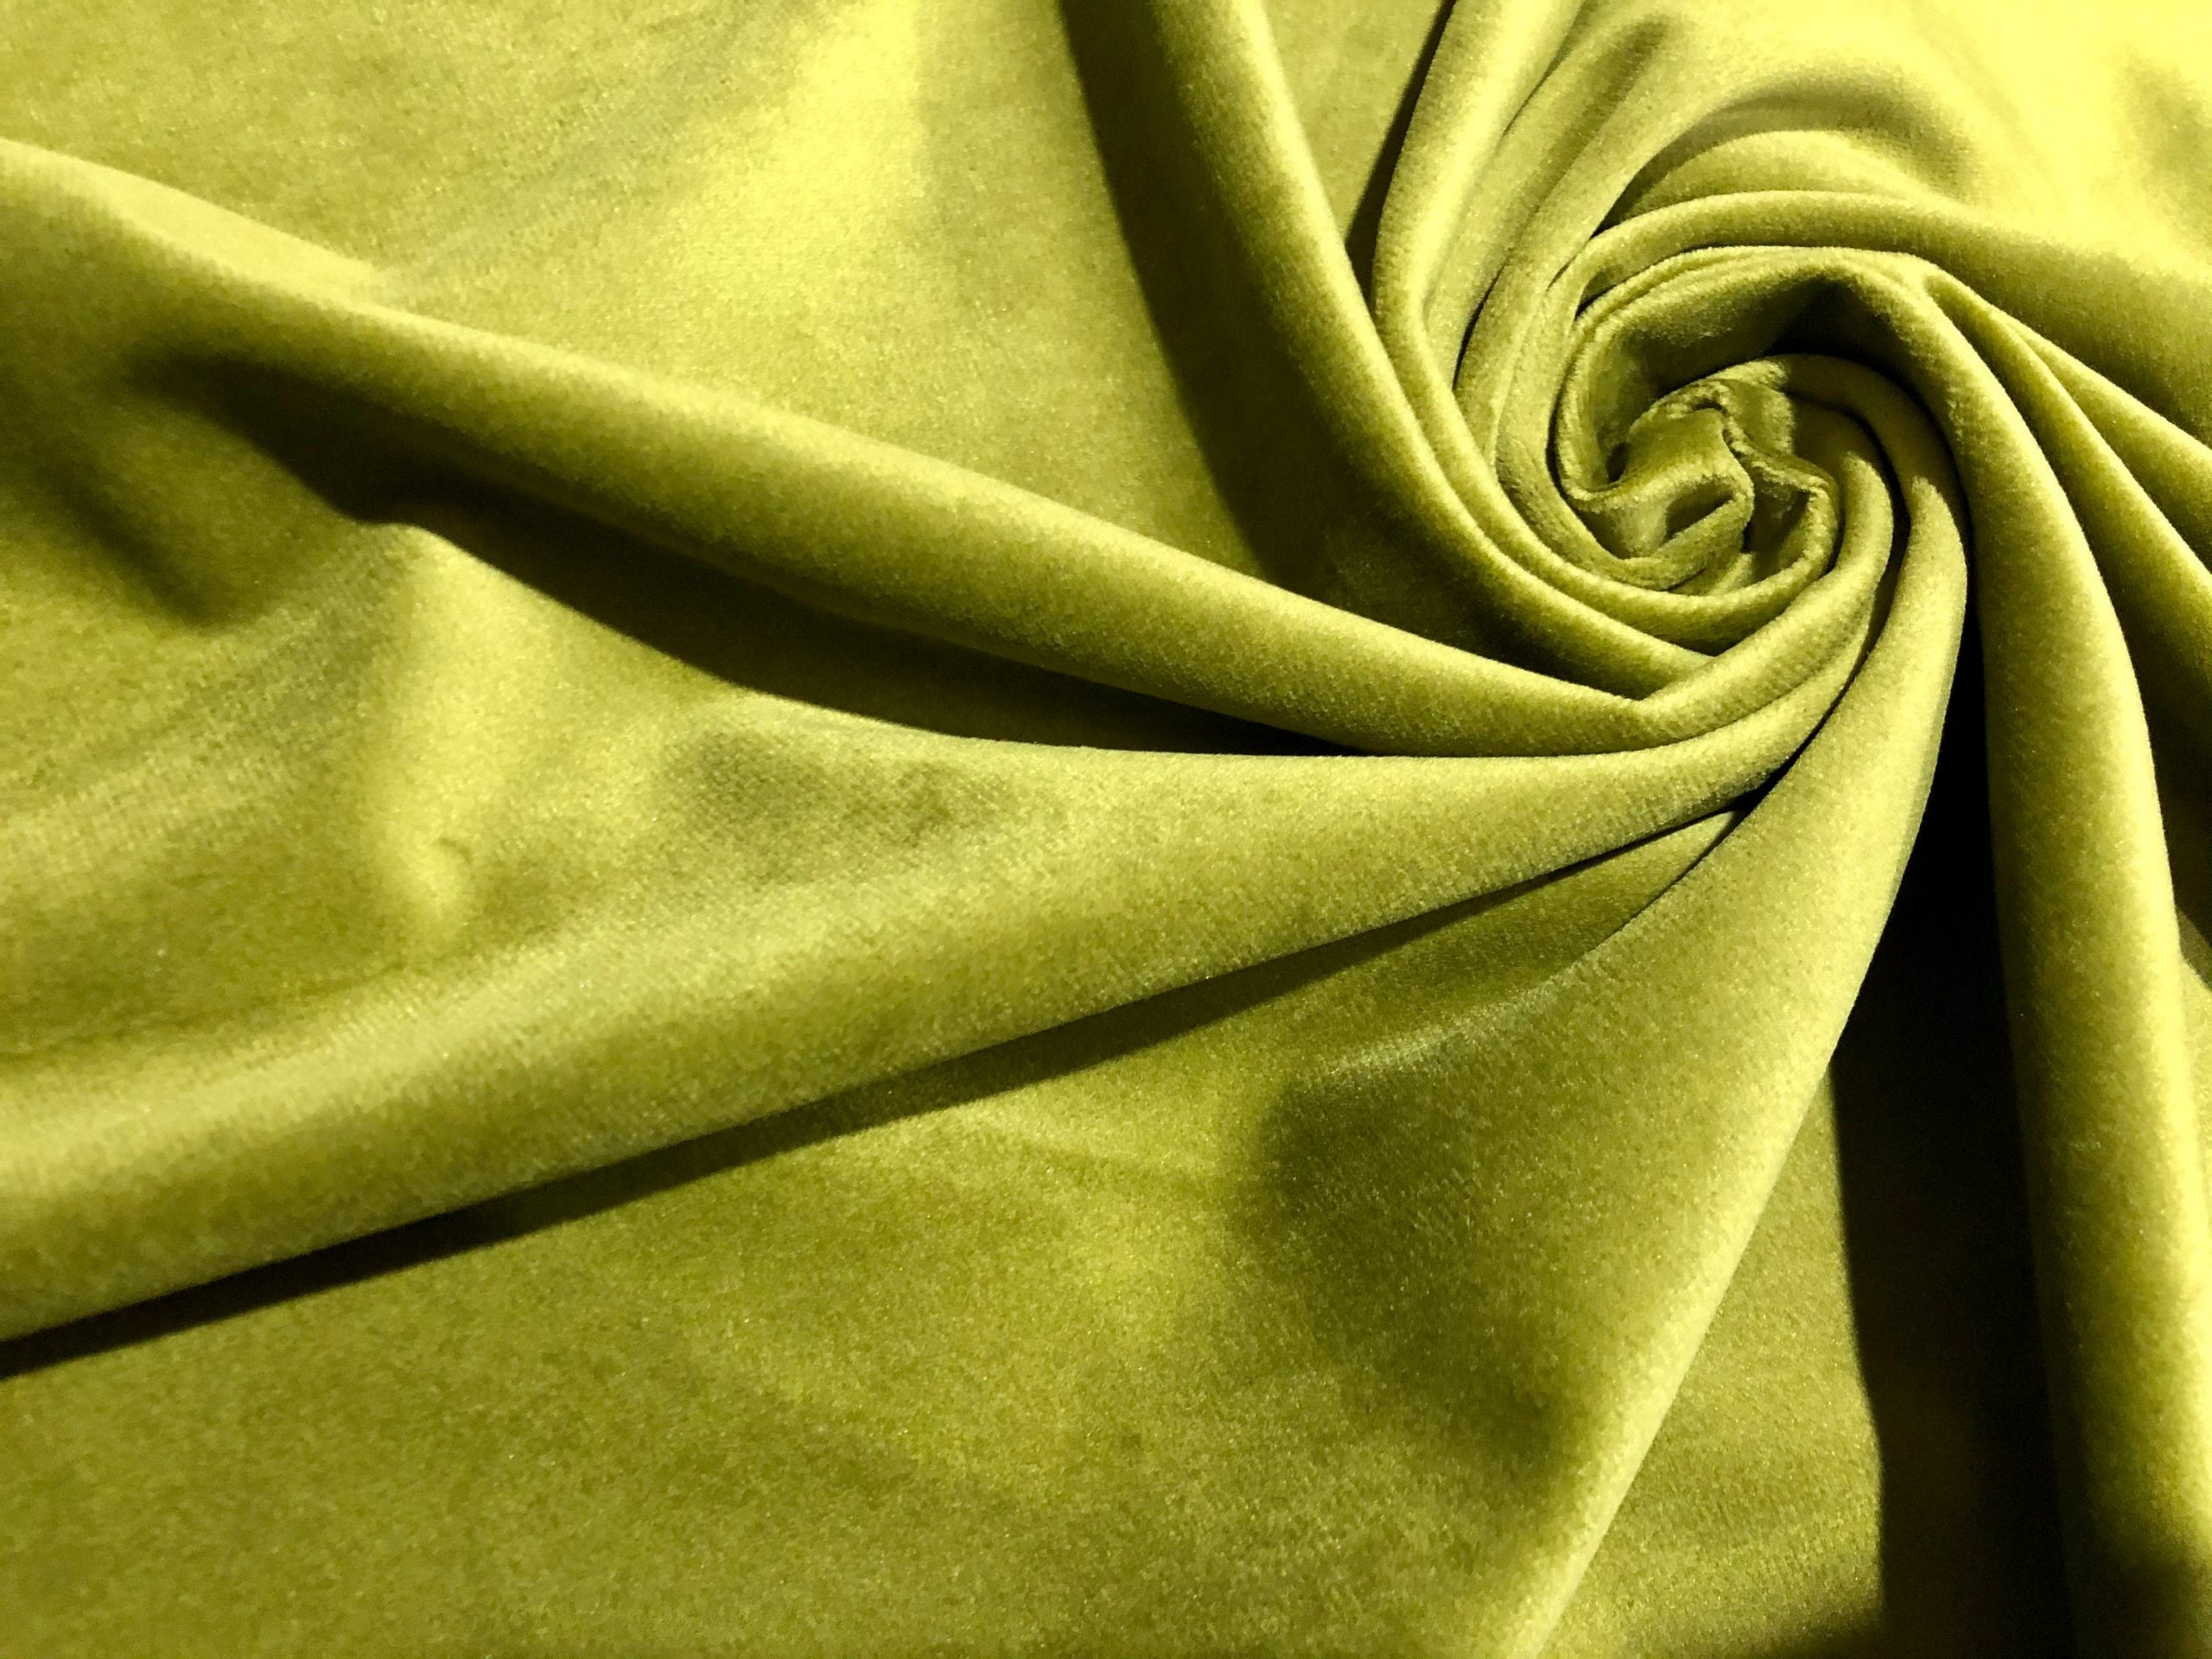 https://lushfabric.com/wp-content/uploads/2021/03/lux-velvet-fabric-super-soft-strong-velour-material-home-decor-curtains-upholstery-dressmaking-59-150-cm-wide-khaki-green-6048e4fe-scaled.jpg